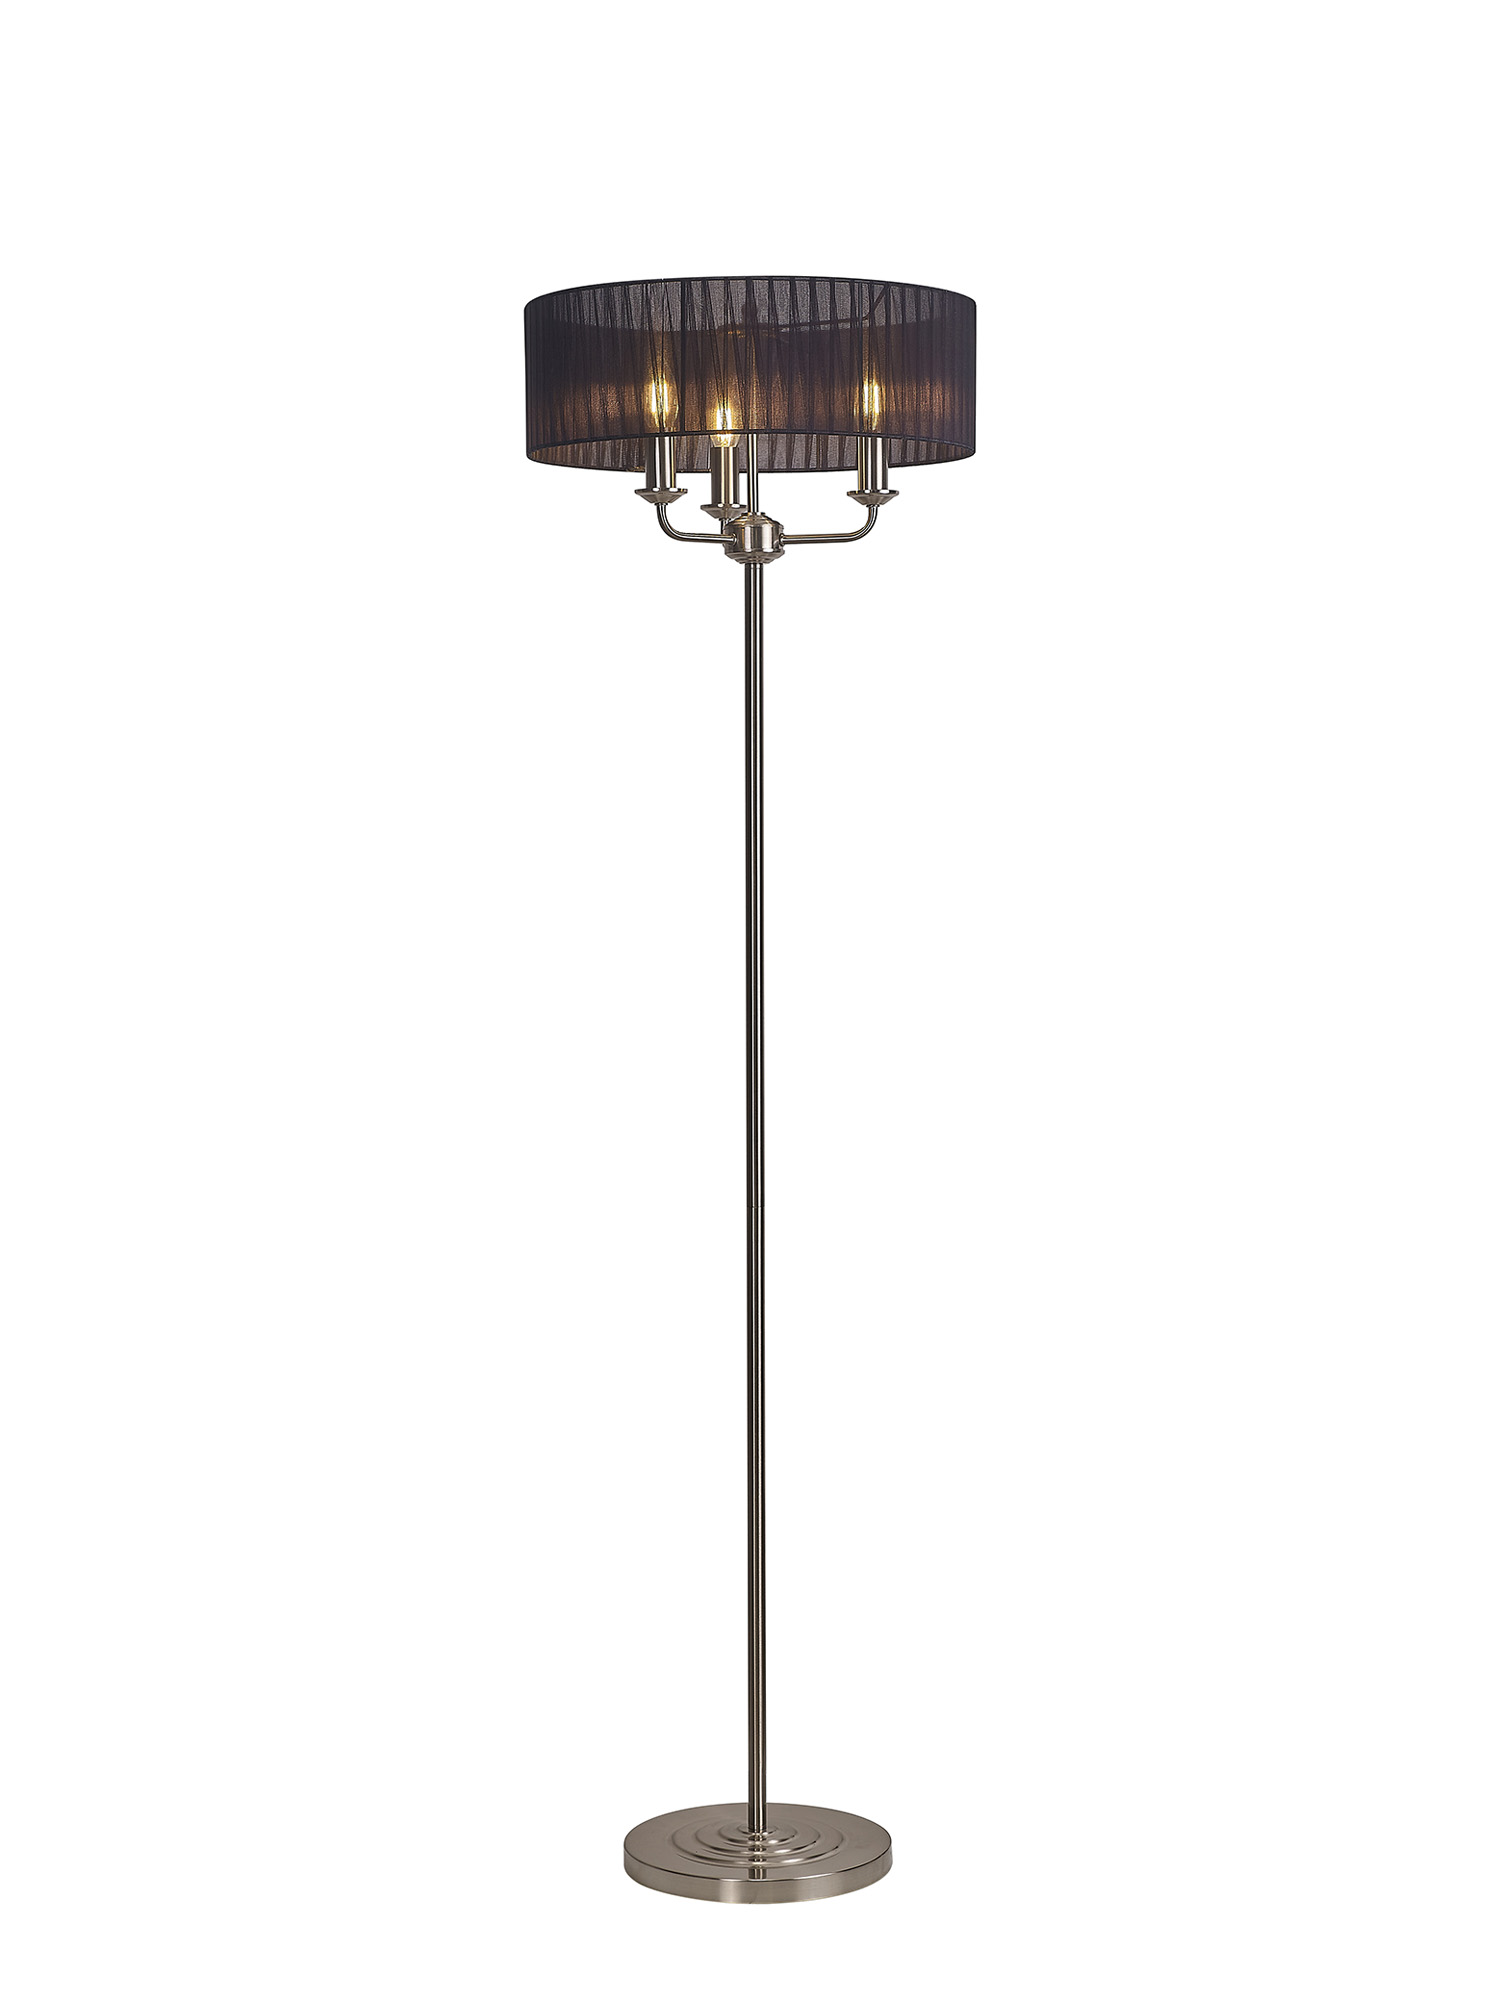 DK0928  Banyan 45cm 3 Light Floor Lamp Satin Nickel, Black